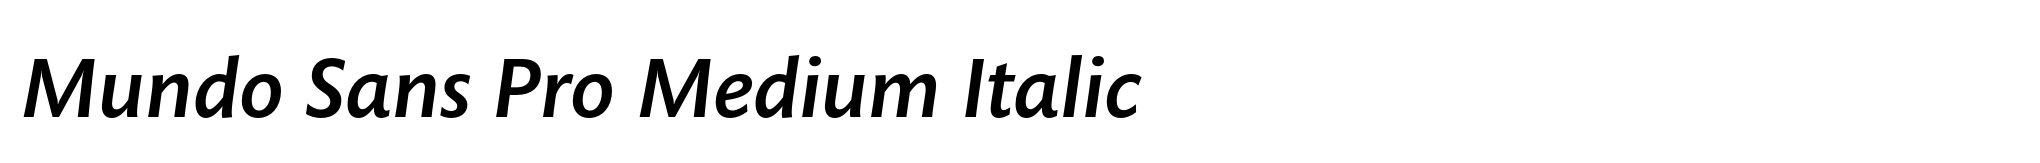 Mundo Sans Pro Medium Italic image